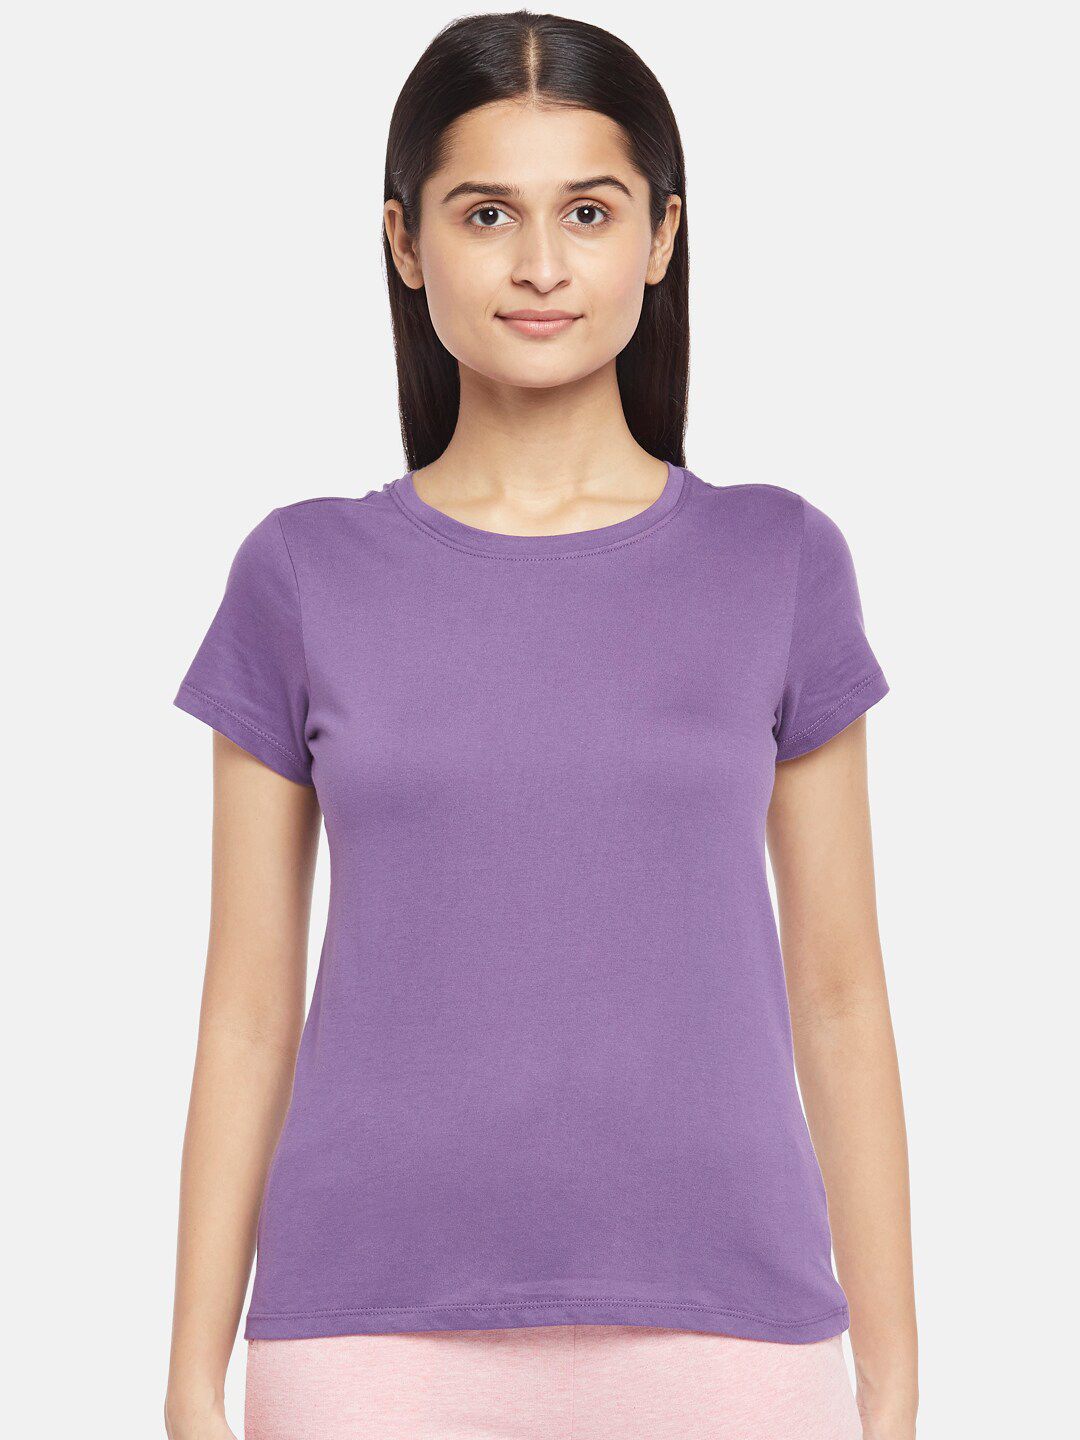 Dreamz by Pantaloons Purple Regular Lounge tshirt Price in India